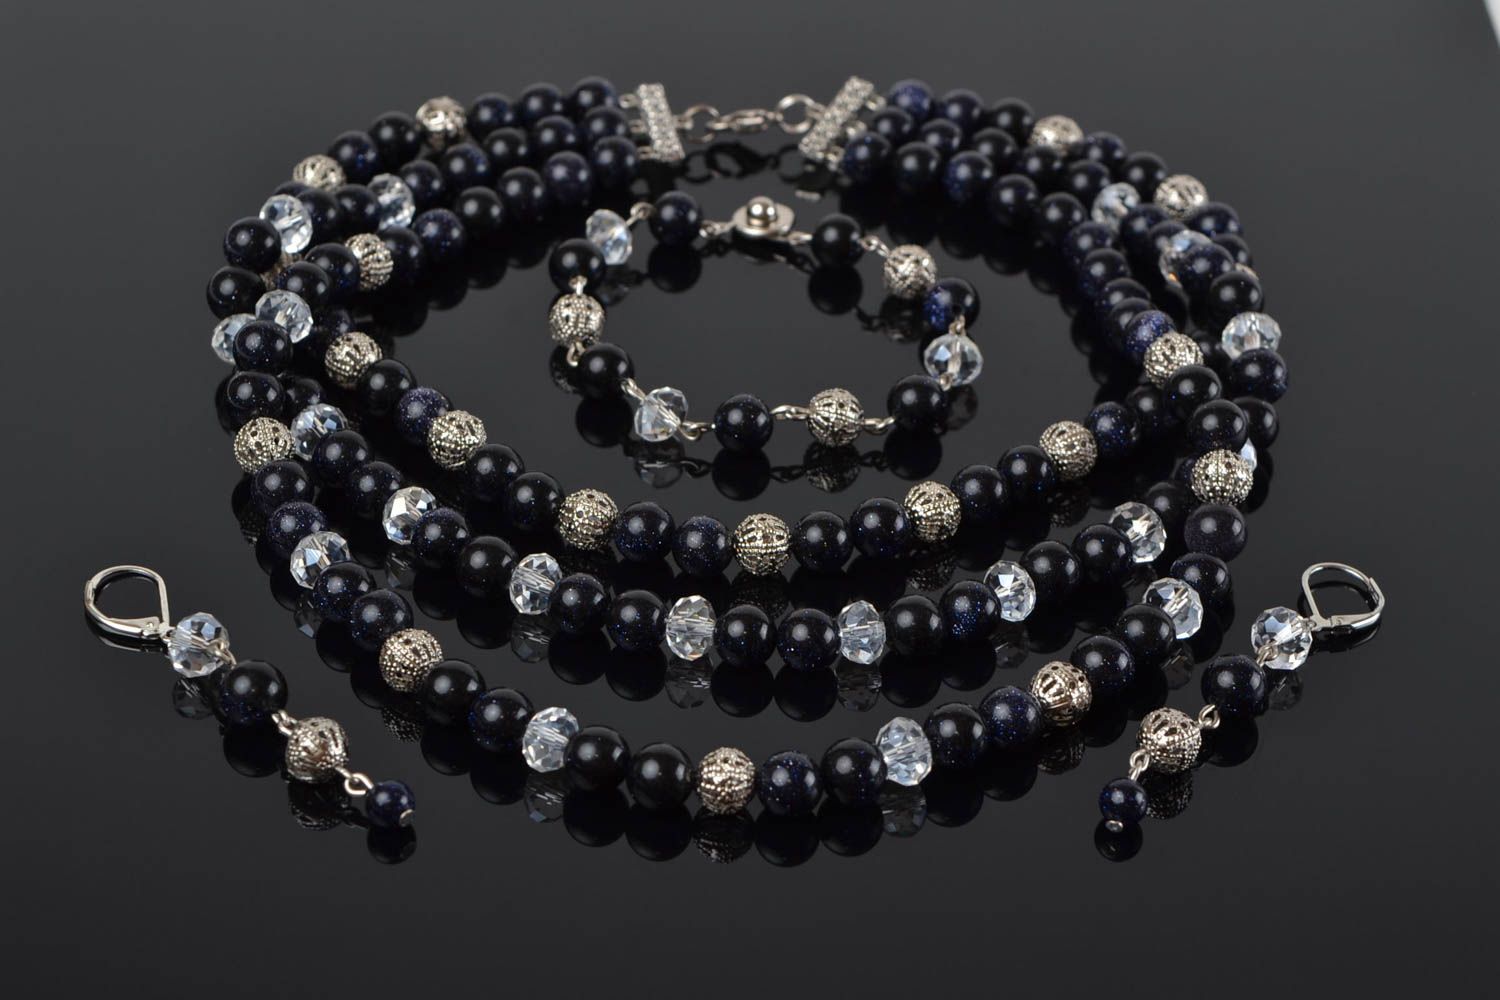 Handmade crystal bead and aventurine jewelry set earrings necklace and bracelet photo 1